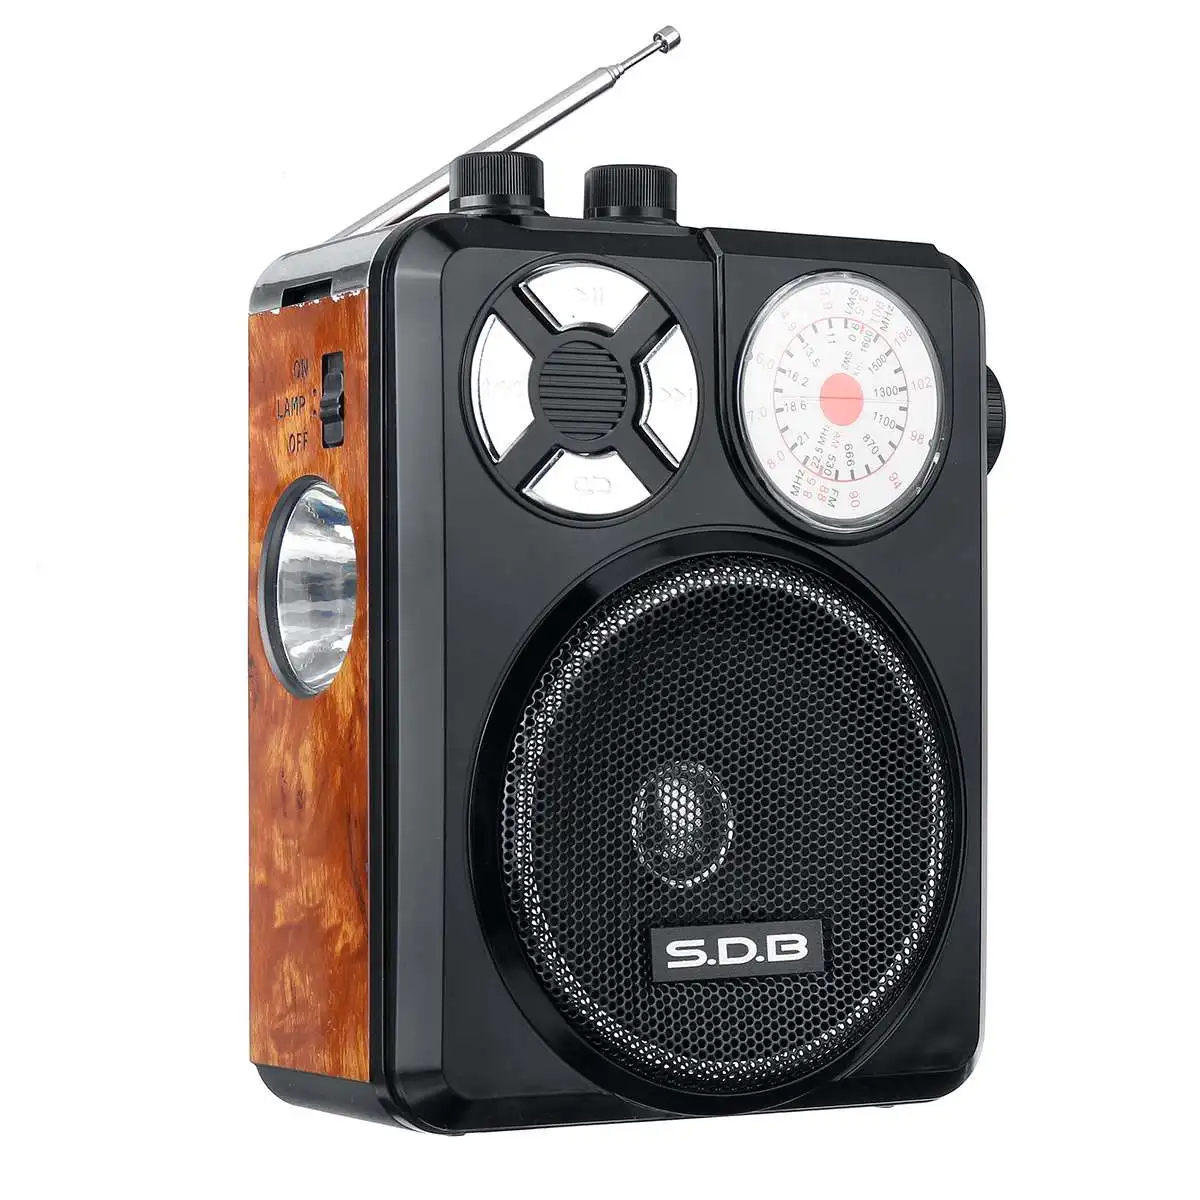 Retro Mini Portable AM FM SW1 SW2 full channel Radio Receiver Handheld Digital FM USB TF MP3 Player Speaker Rechargeable